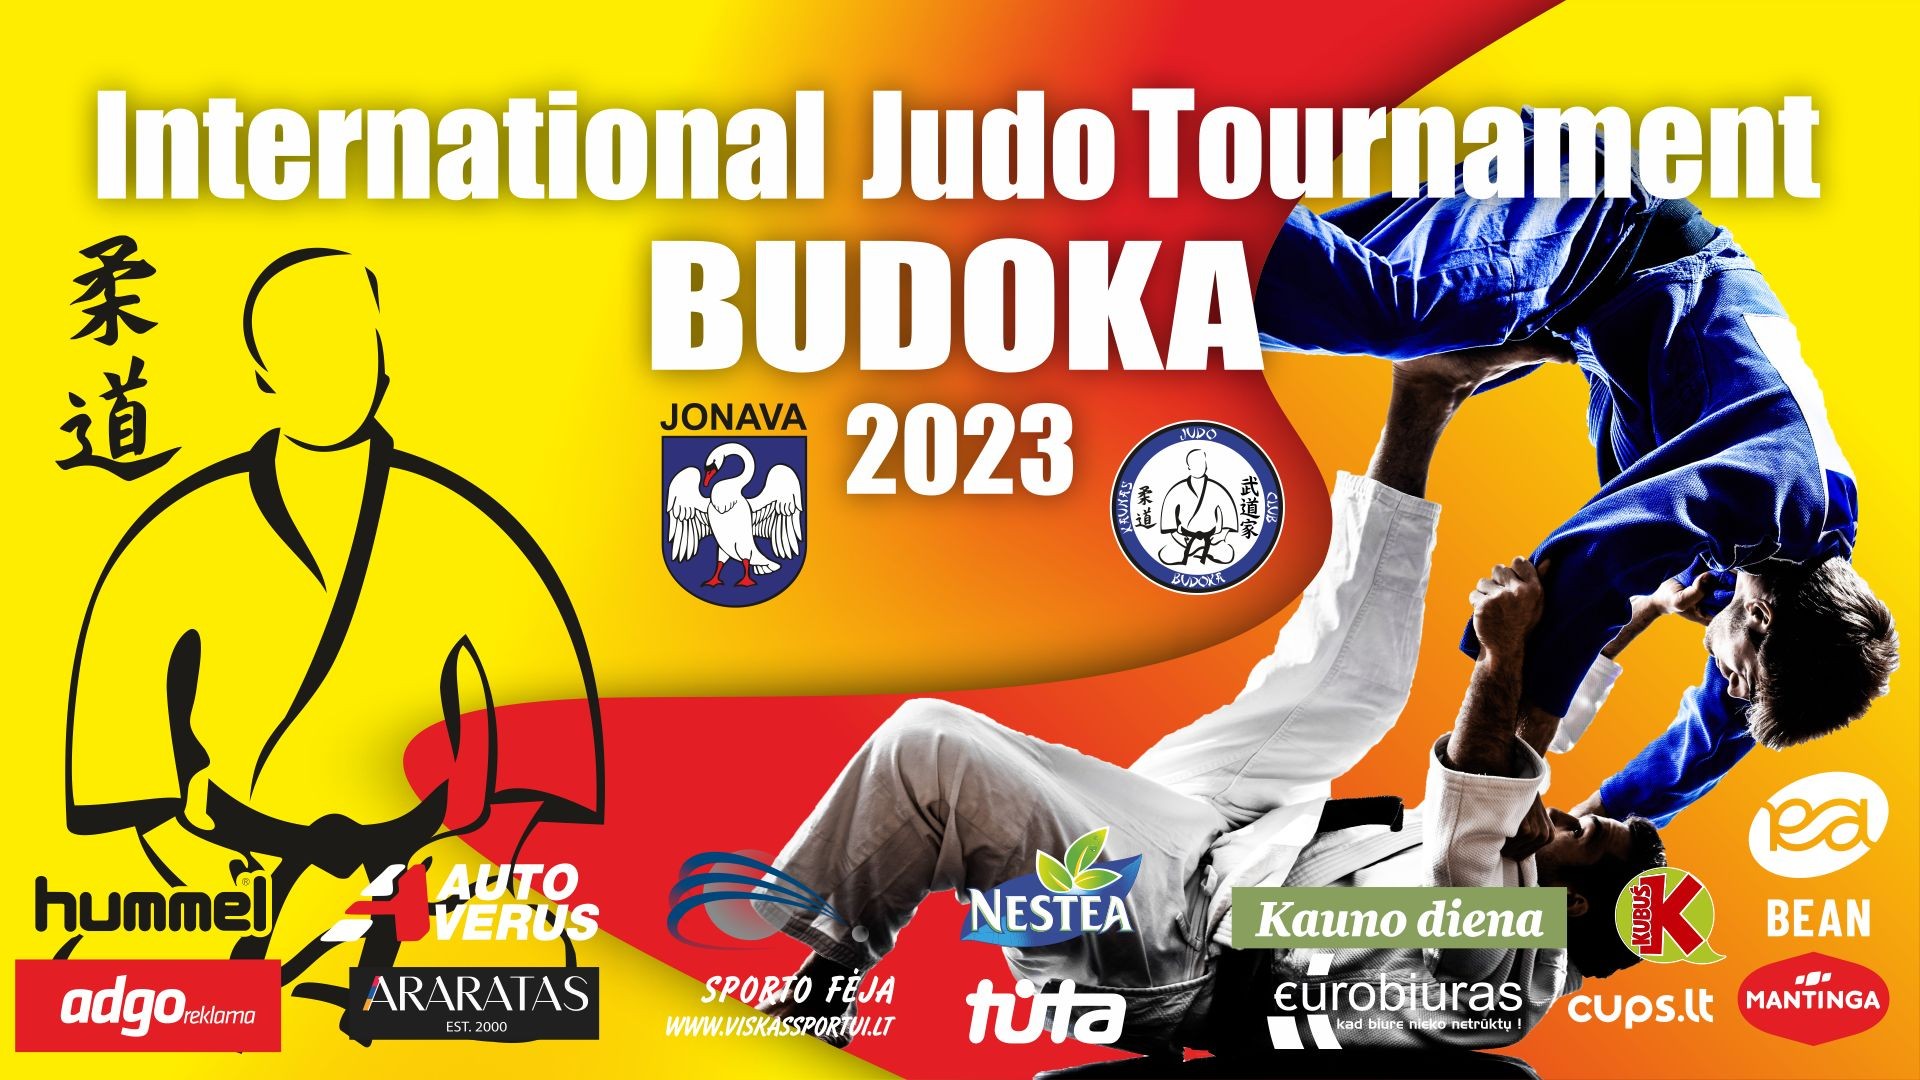 Tatami 2 - INTERNATIONAL JUDO CLUB BUDOKA TOURNAMENT 2023